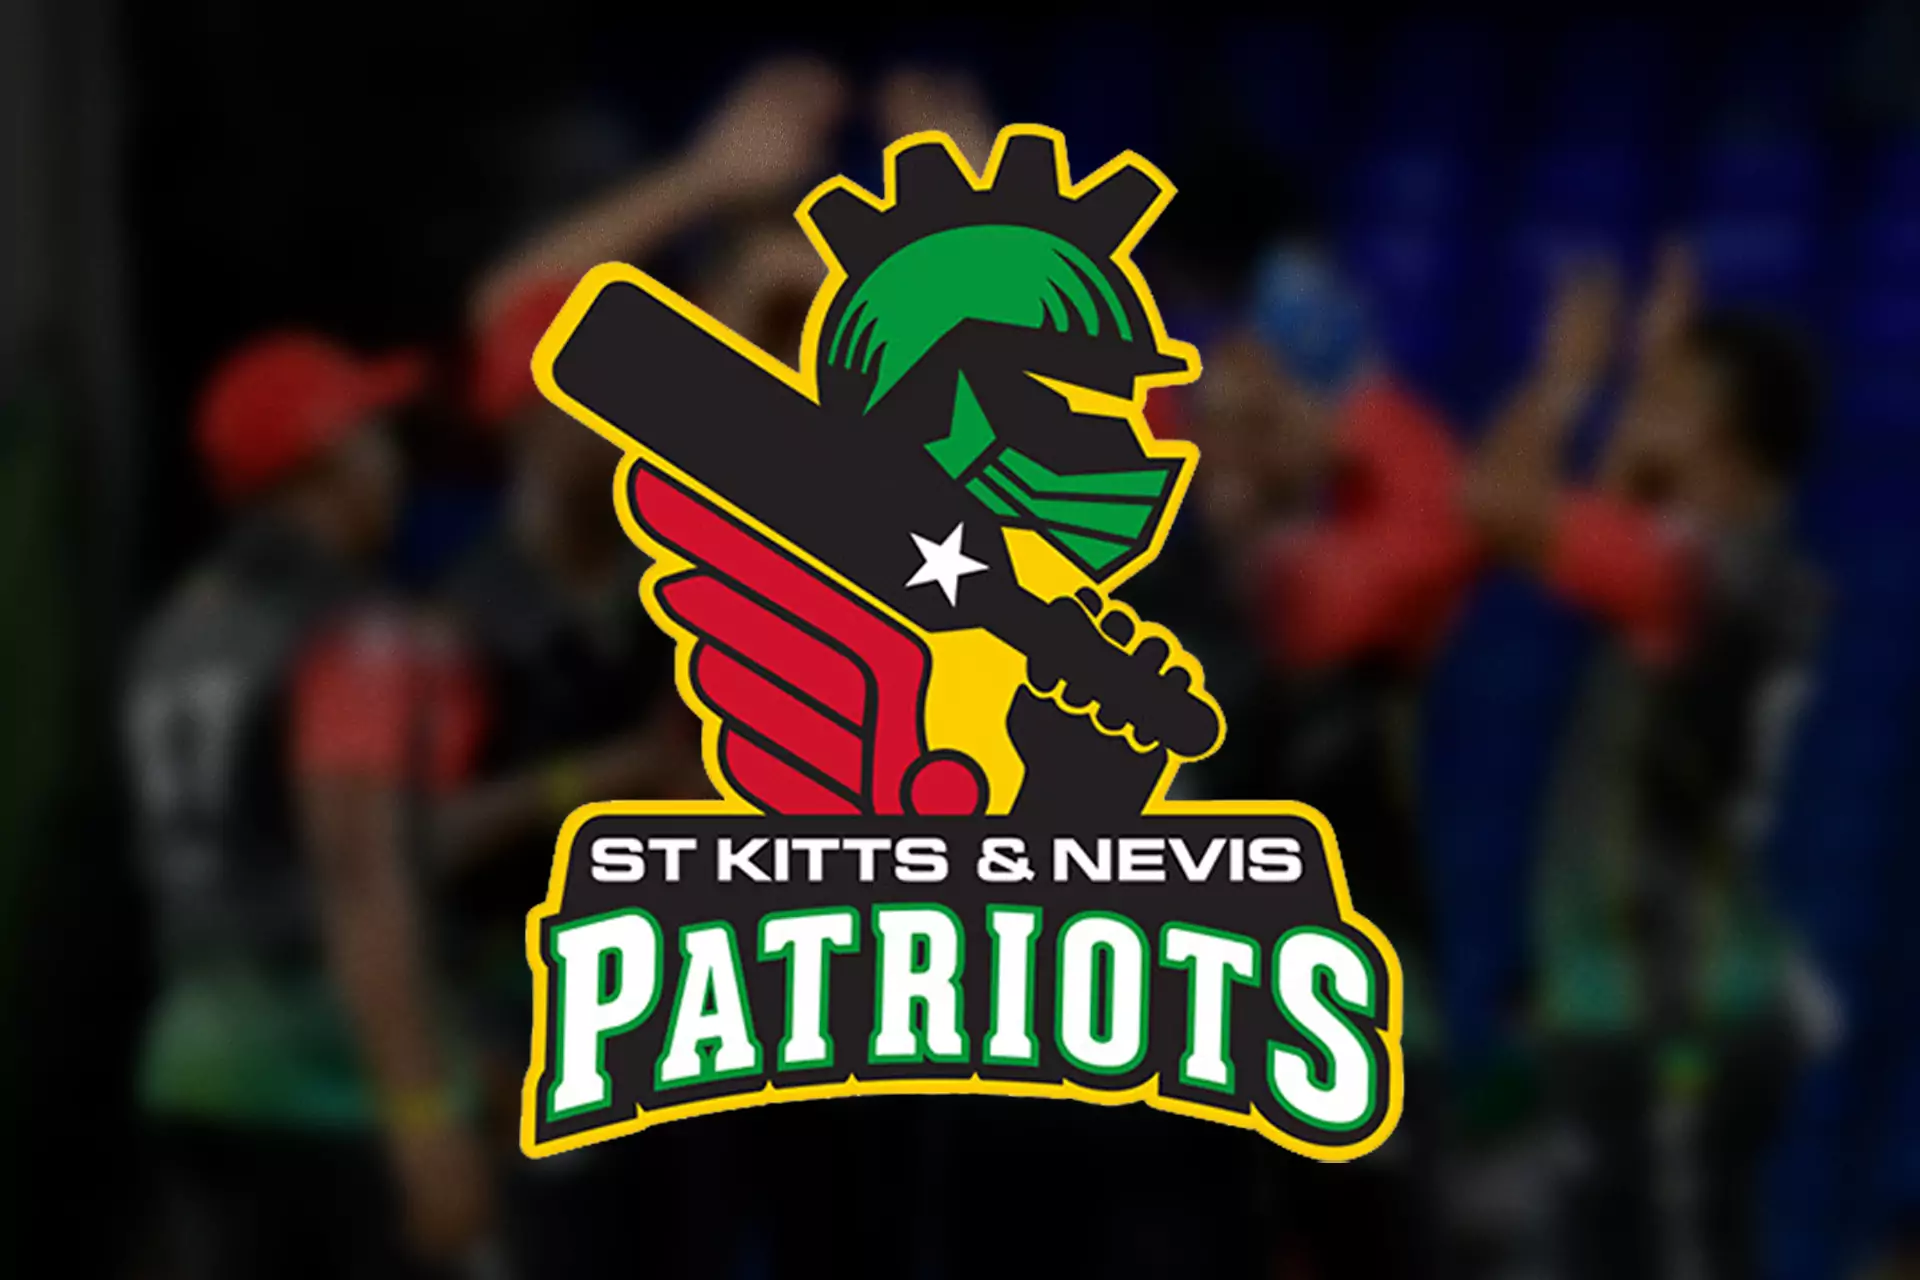 The St Kitts & Nevis Patriots team is based on St Kitts & Nevis islands.